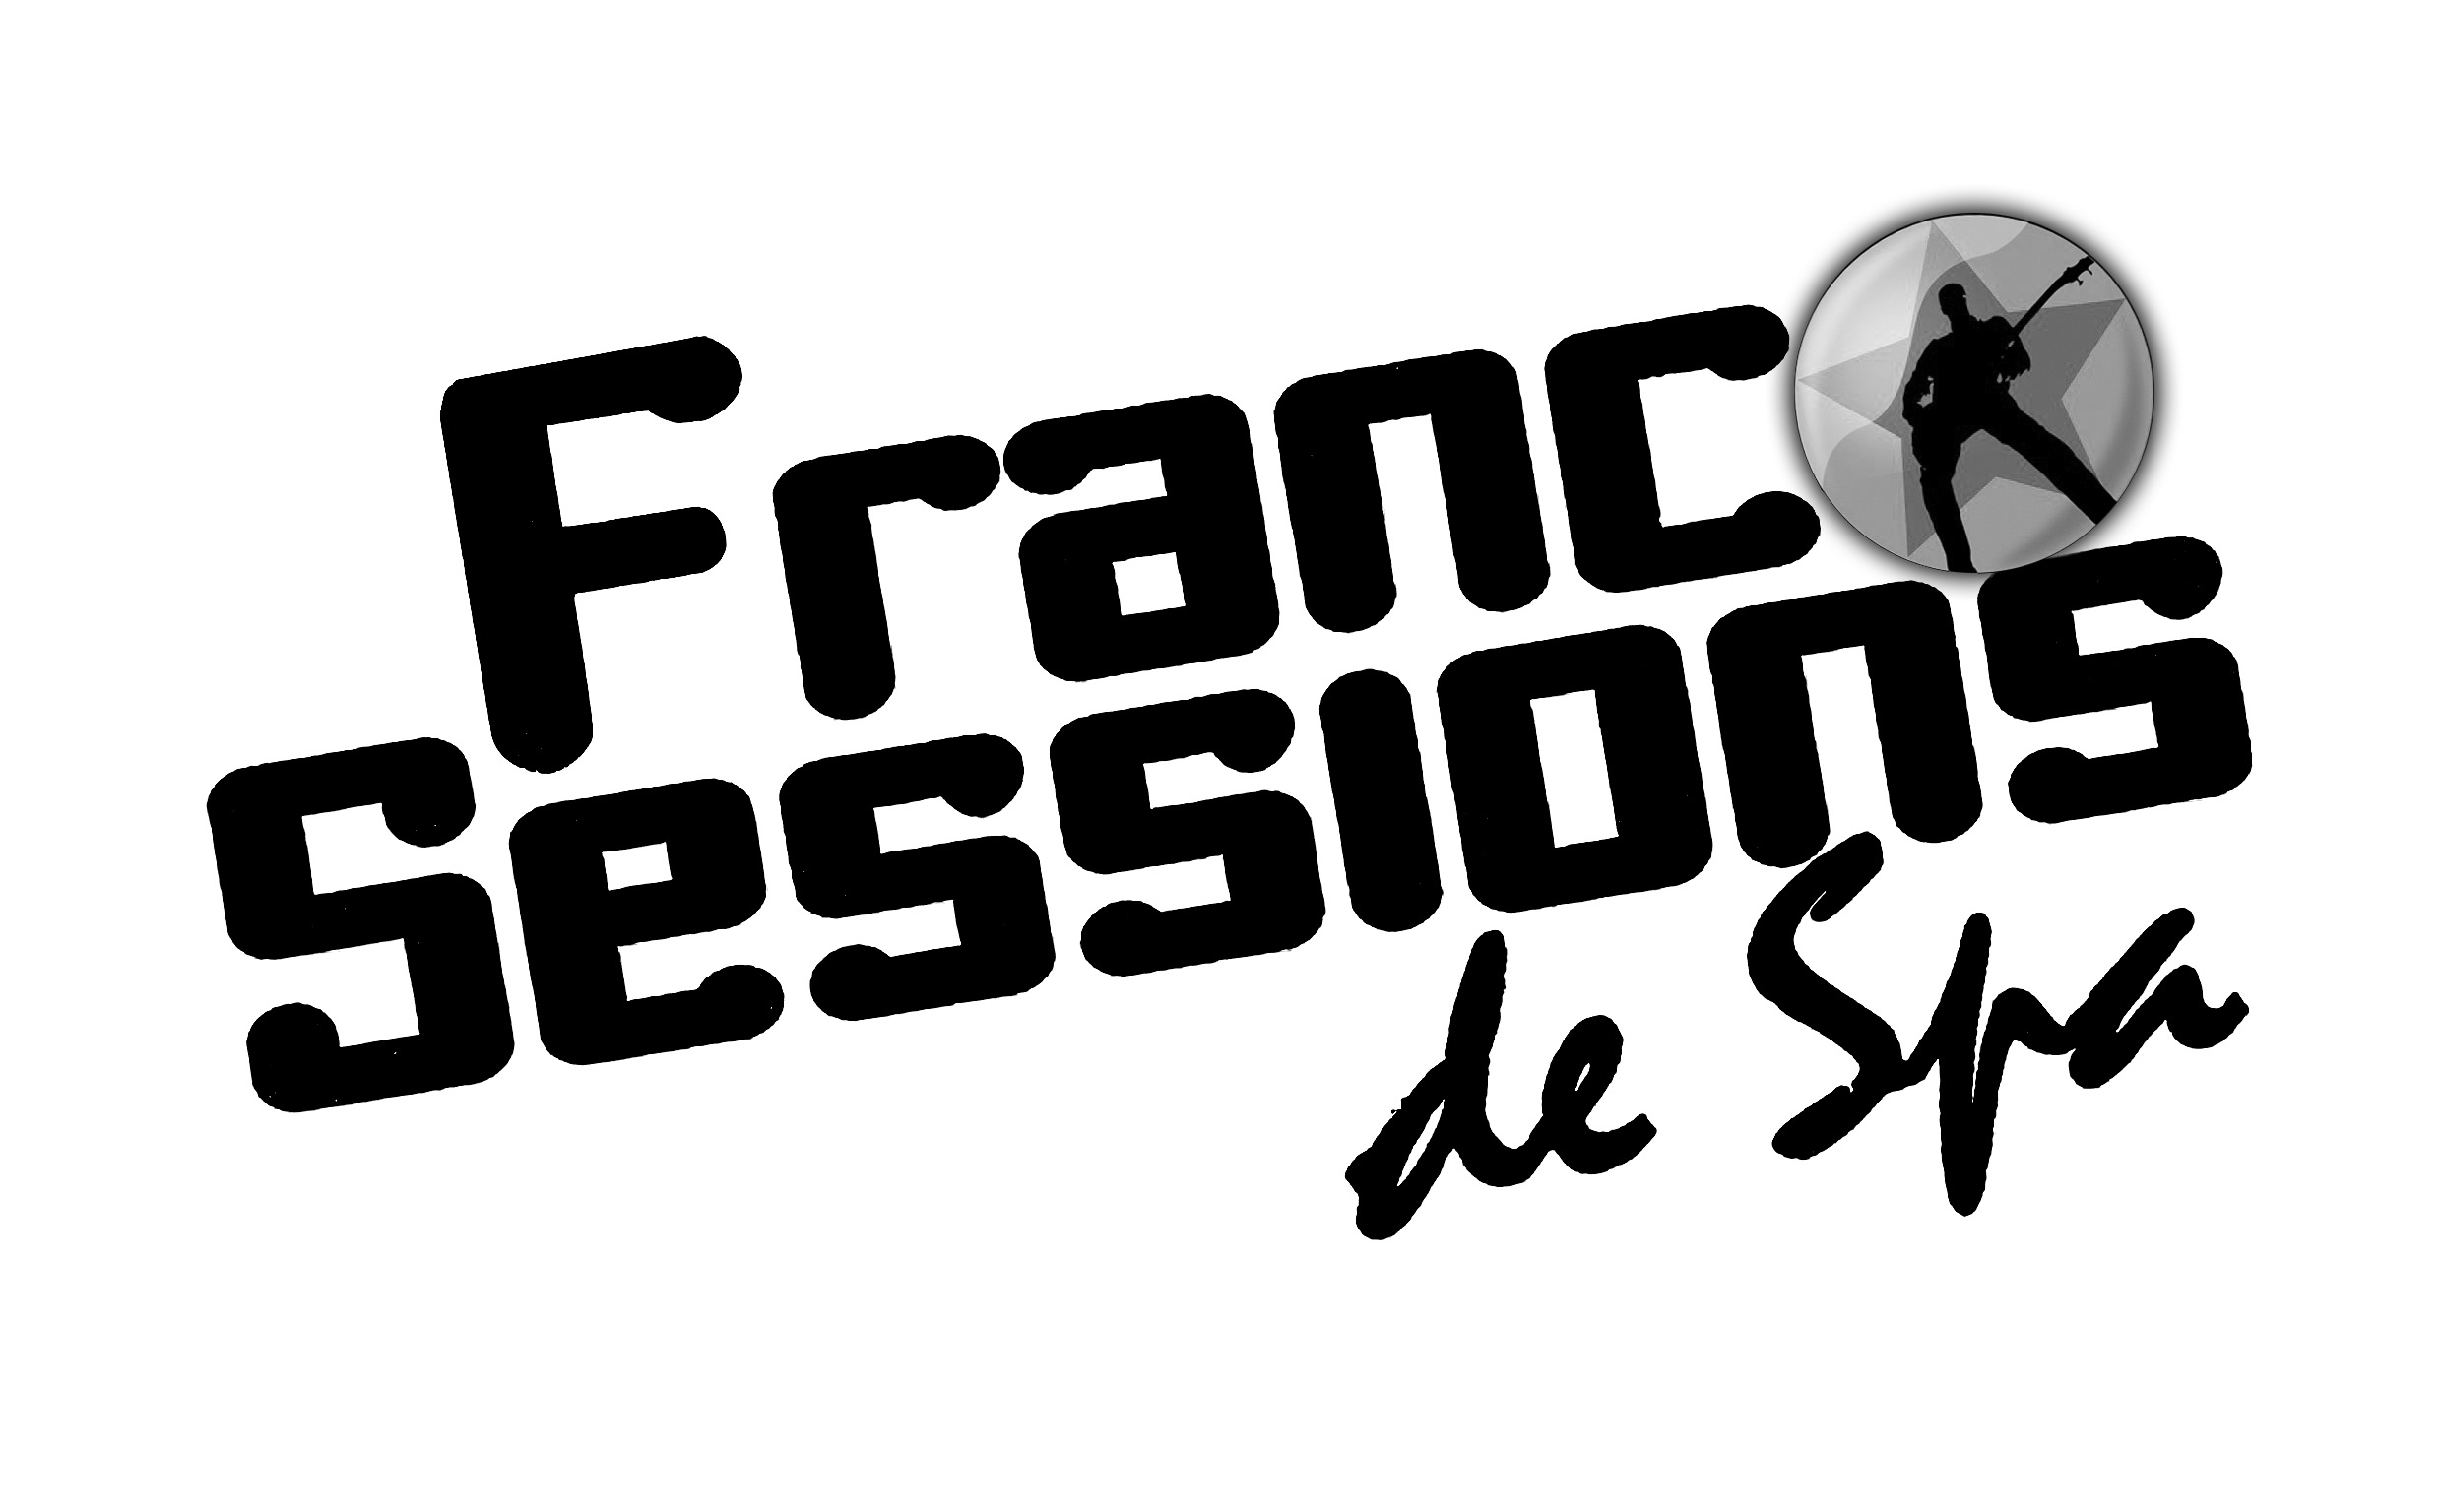 Francosessions